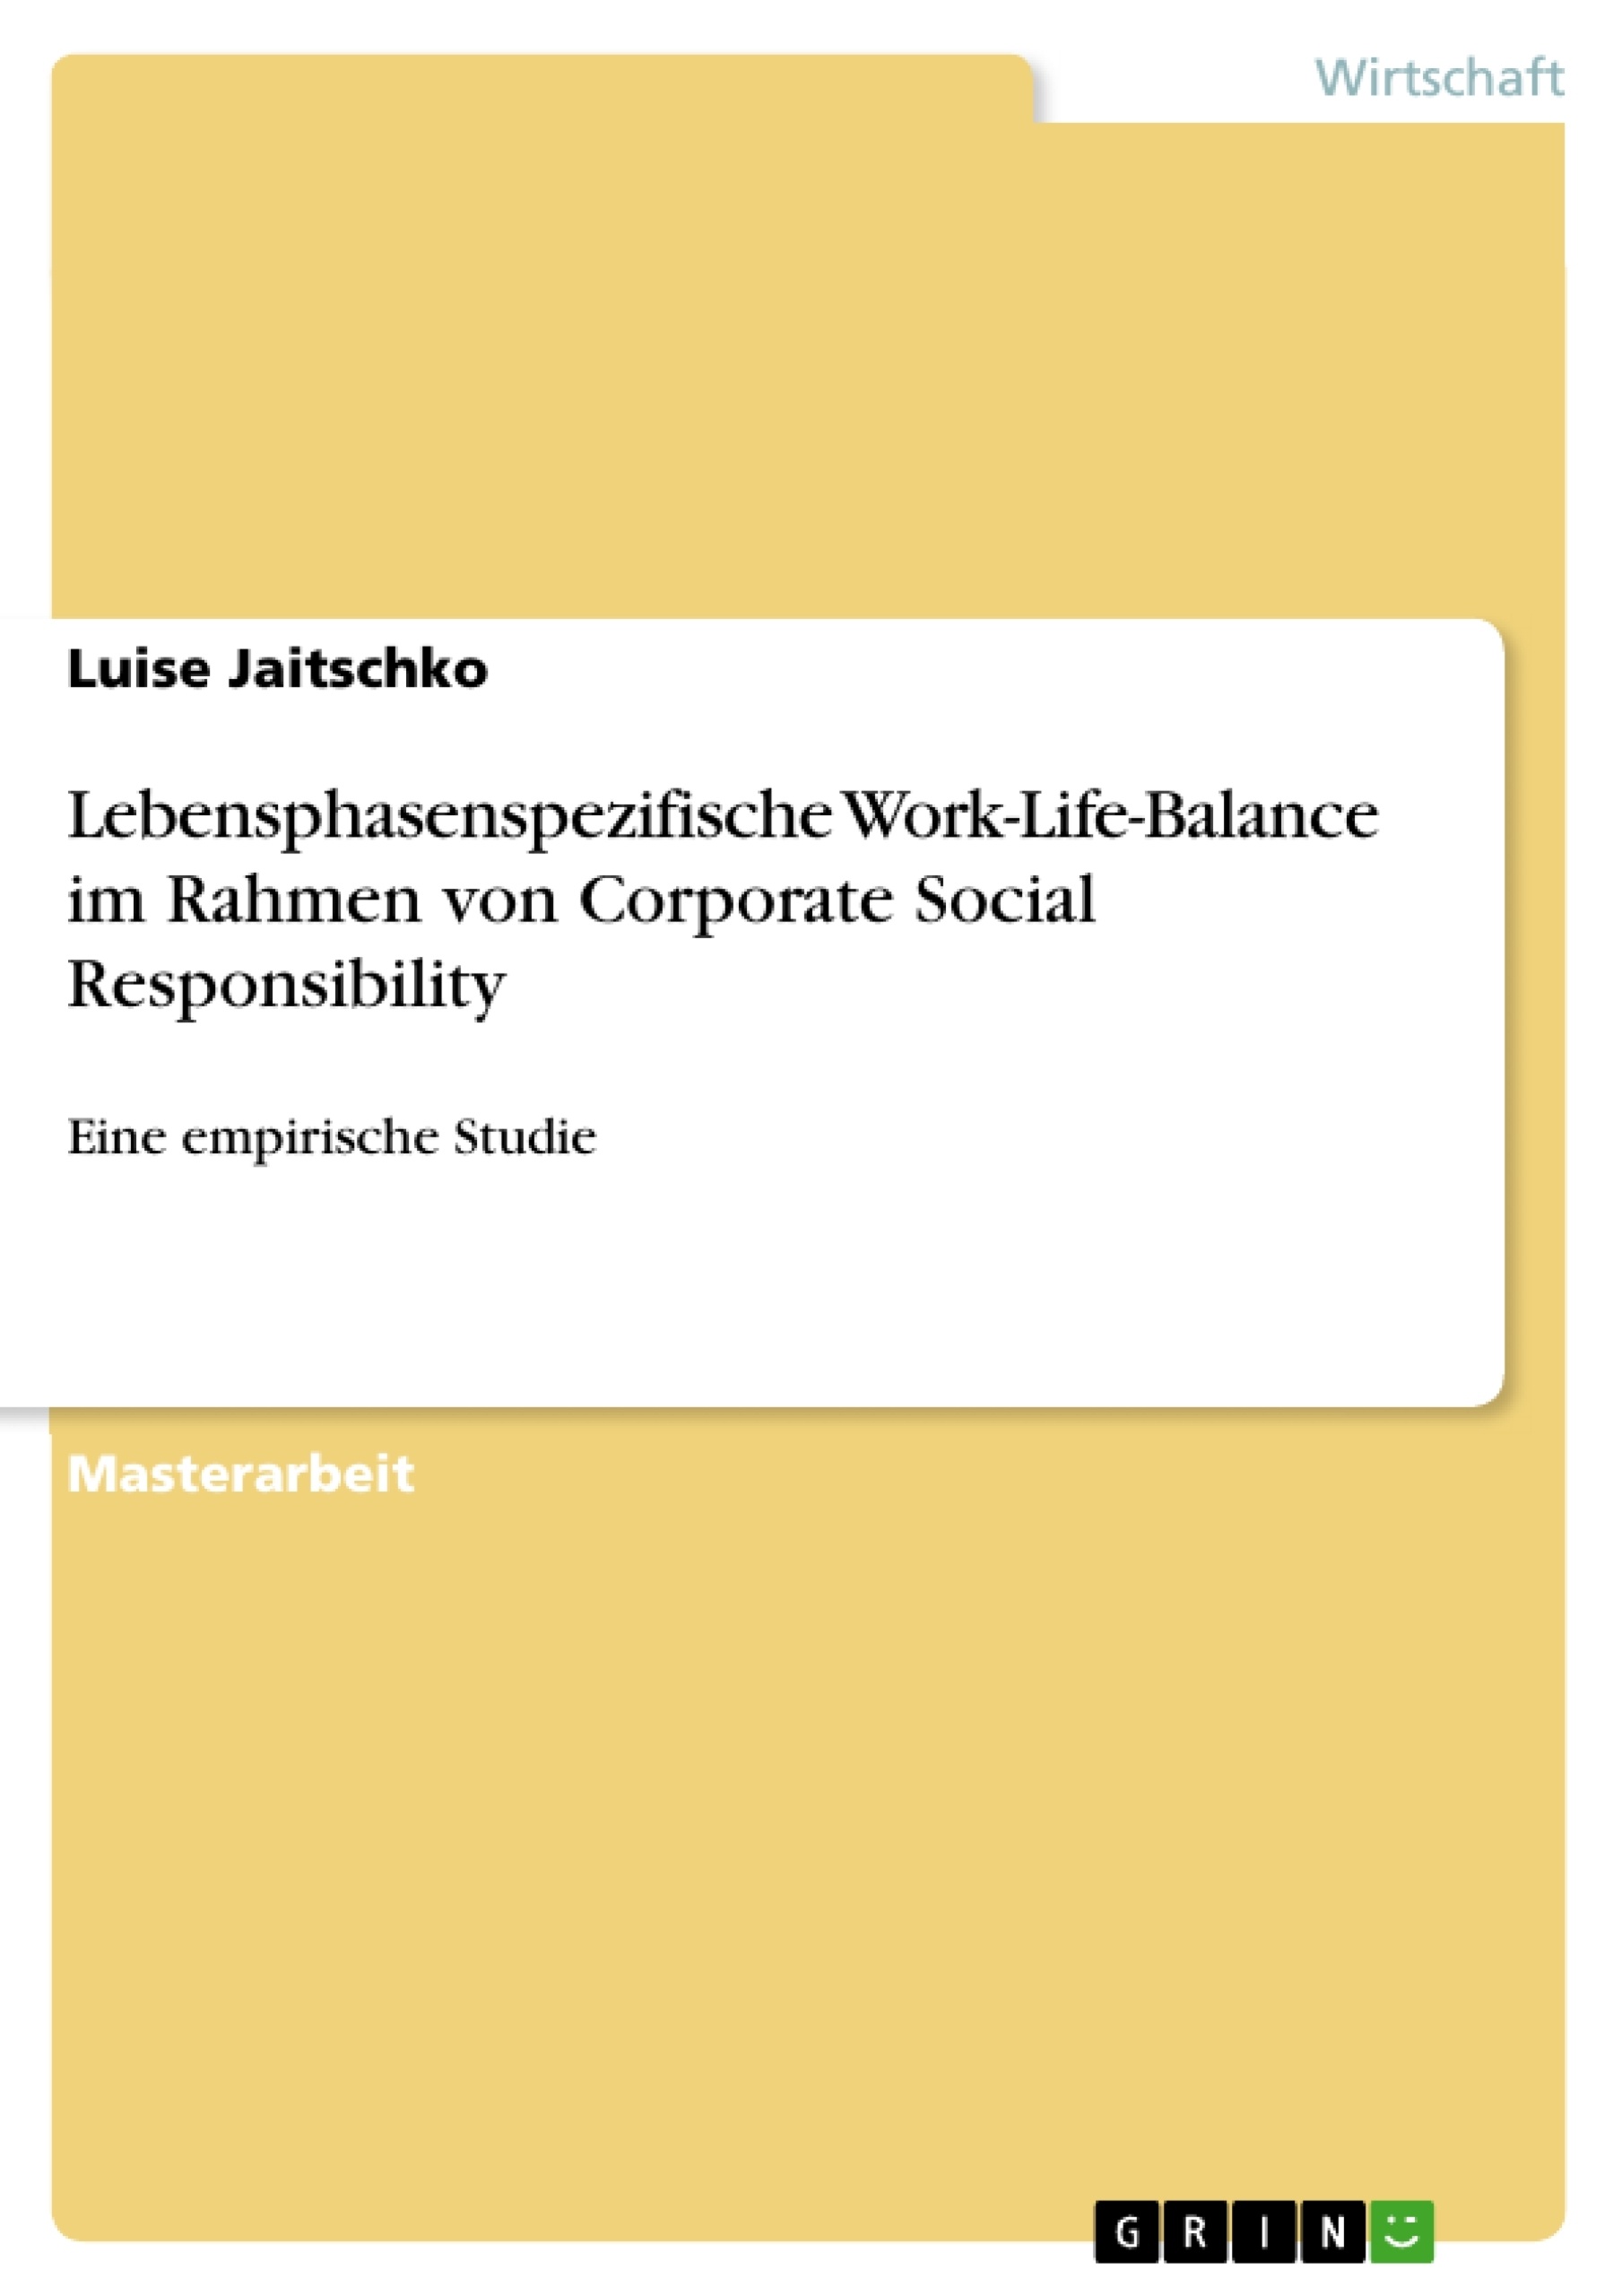 Titel: Lebensphasenspezifische Work-Life-Balance im Rahmen von Corporate Social Responsibility